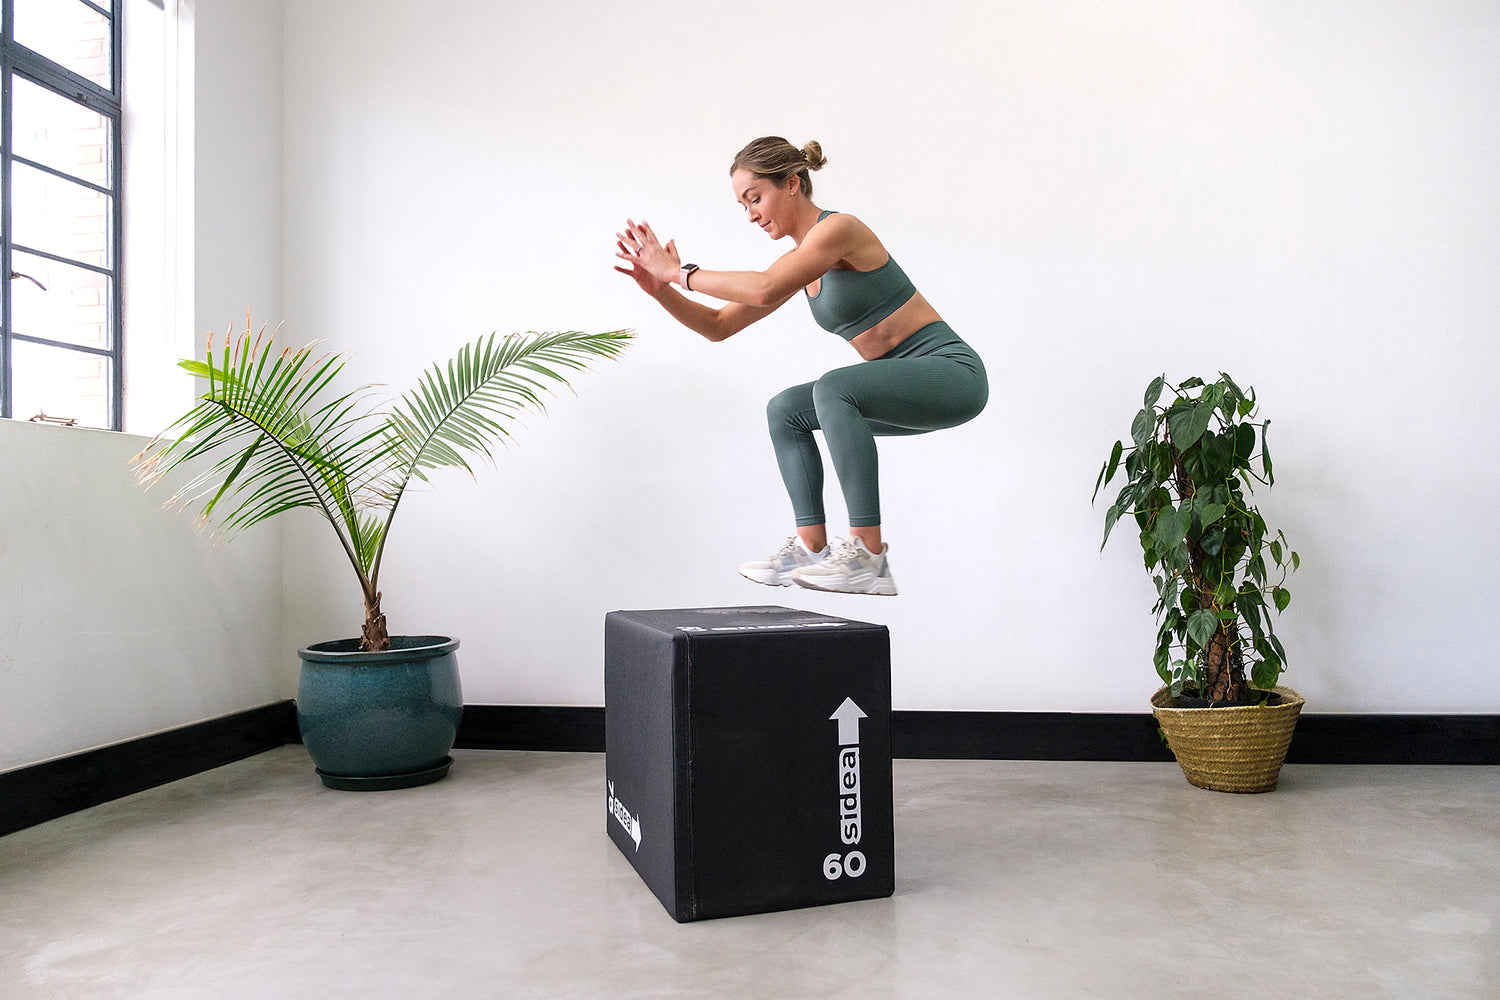 Coach Cords (Daniella Corder) doing a box jump onto a "side a" branded box.